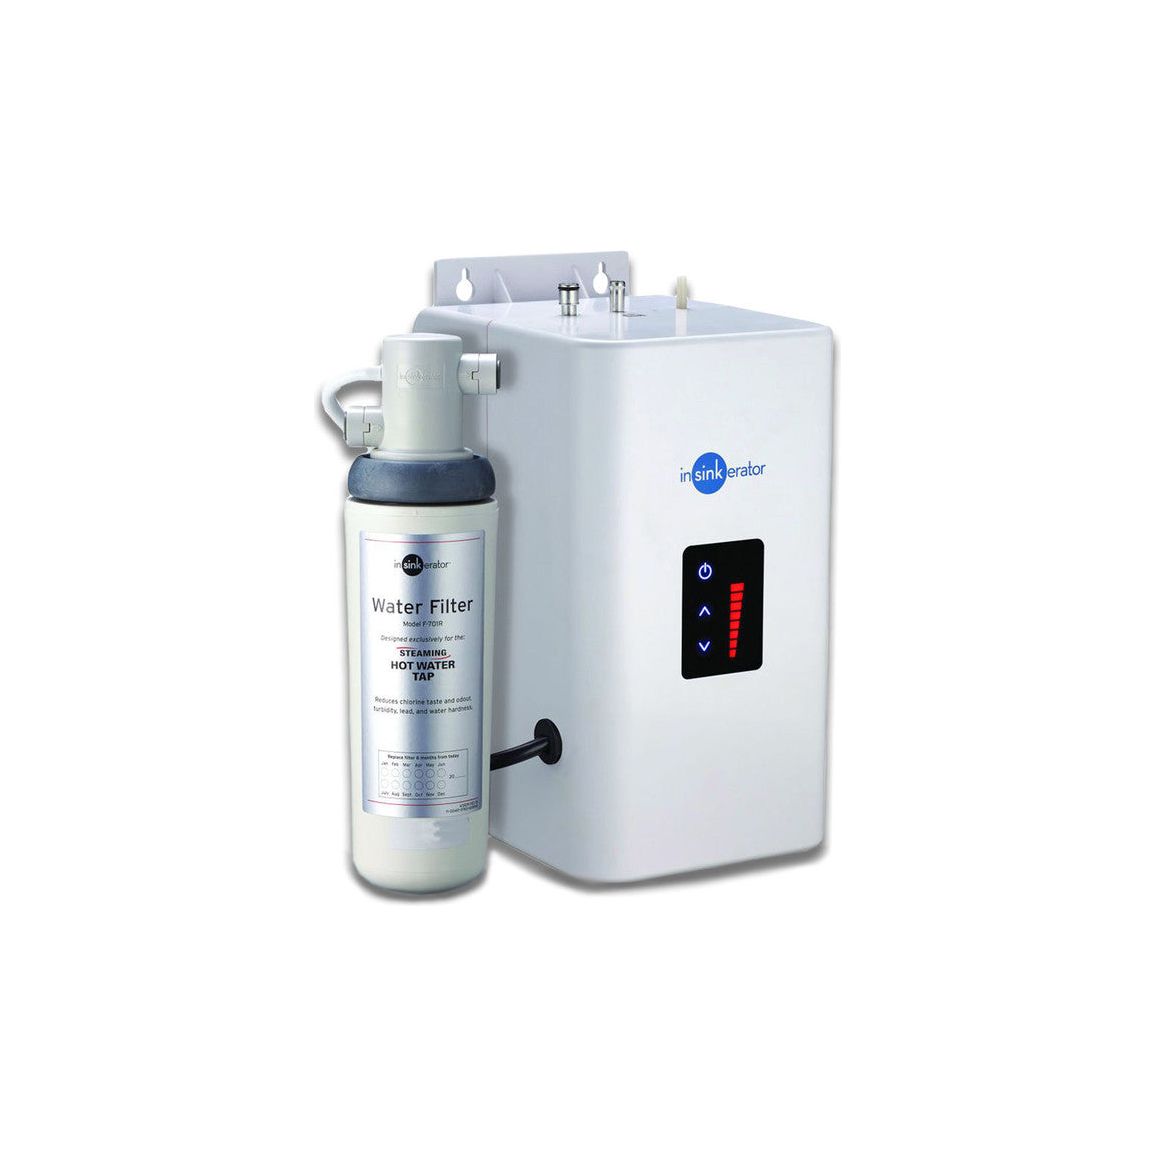 Grifo de agua caliente InSinkErator GN1100, tanque Neo y filtro de agua - Acero cepillado